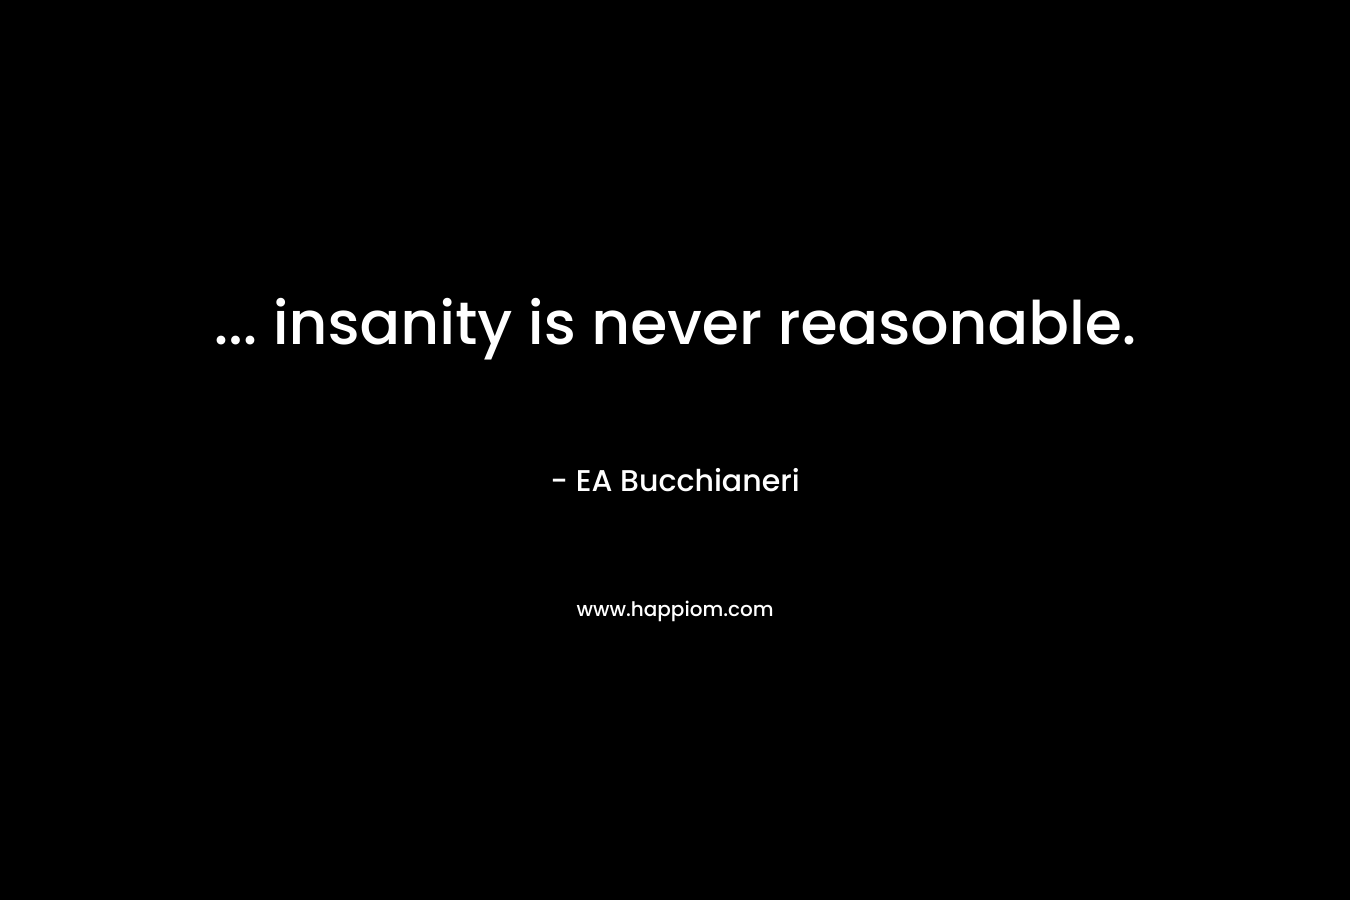 ... insanity is never reasonable.